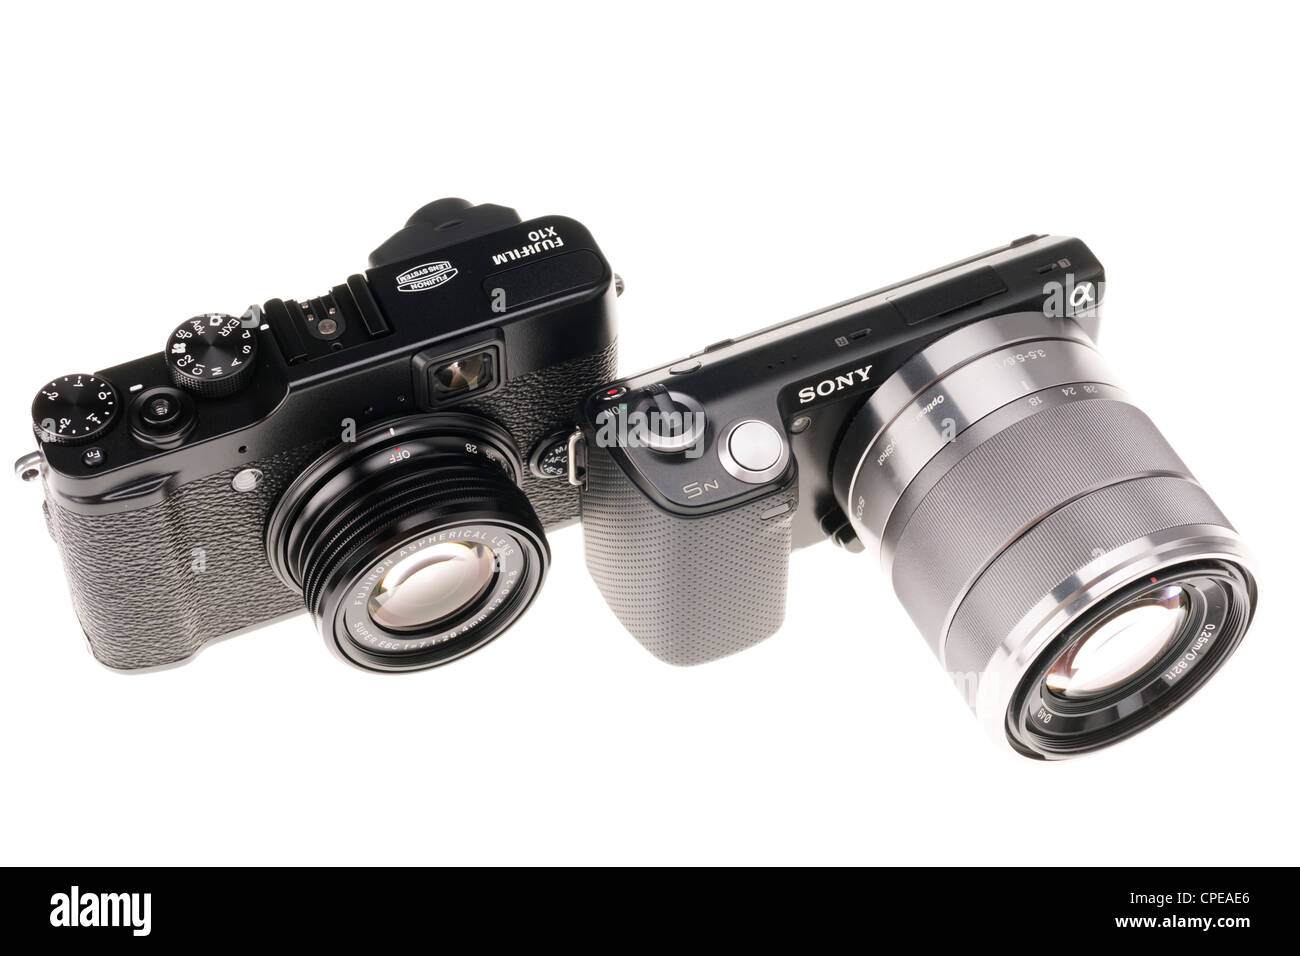 Sony NEX-5n and Fujifilm X10 rival designs of compact semi-pro camera, 2012  Stock Photo - Alamy